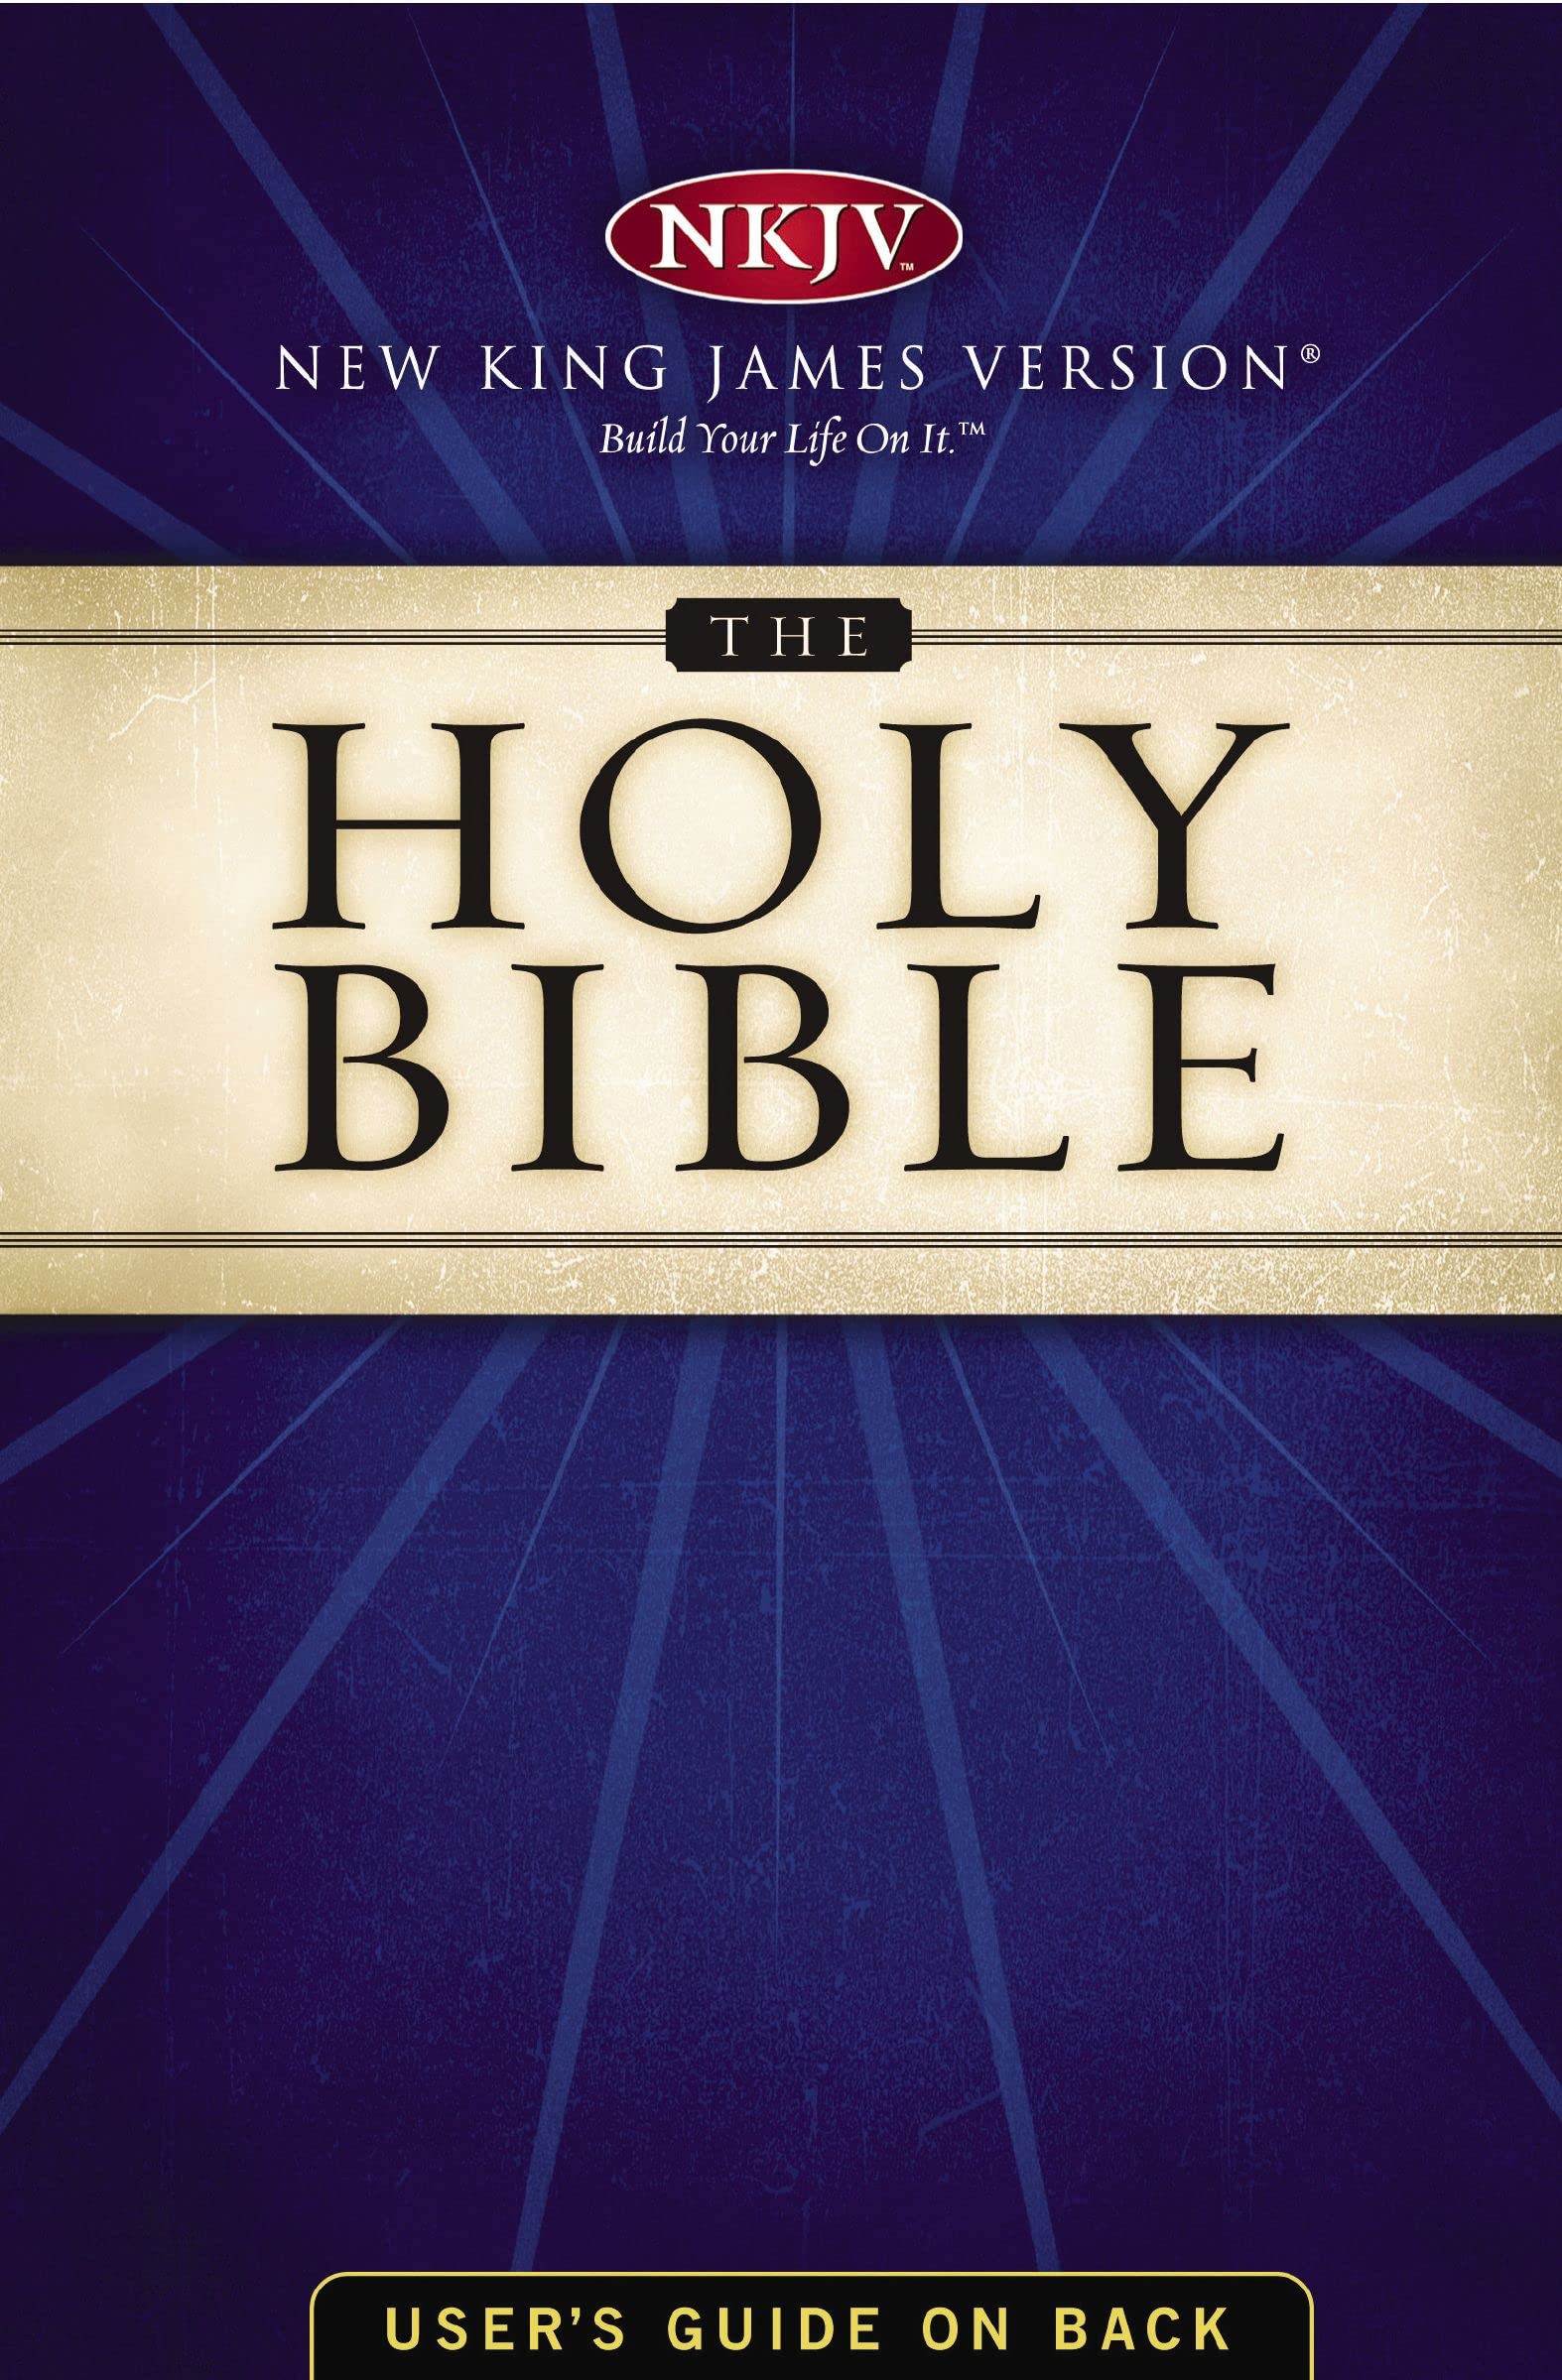 NKJV, Holy Bible: Holy Bible, New King James Version